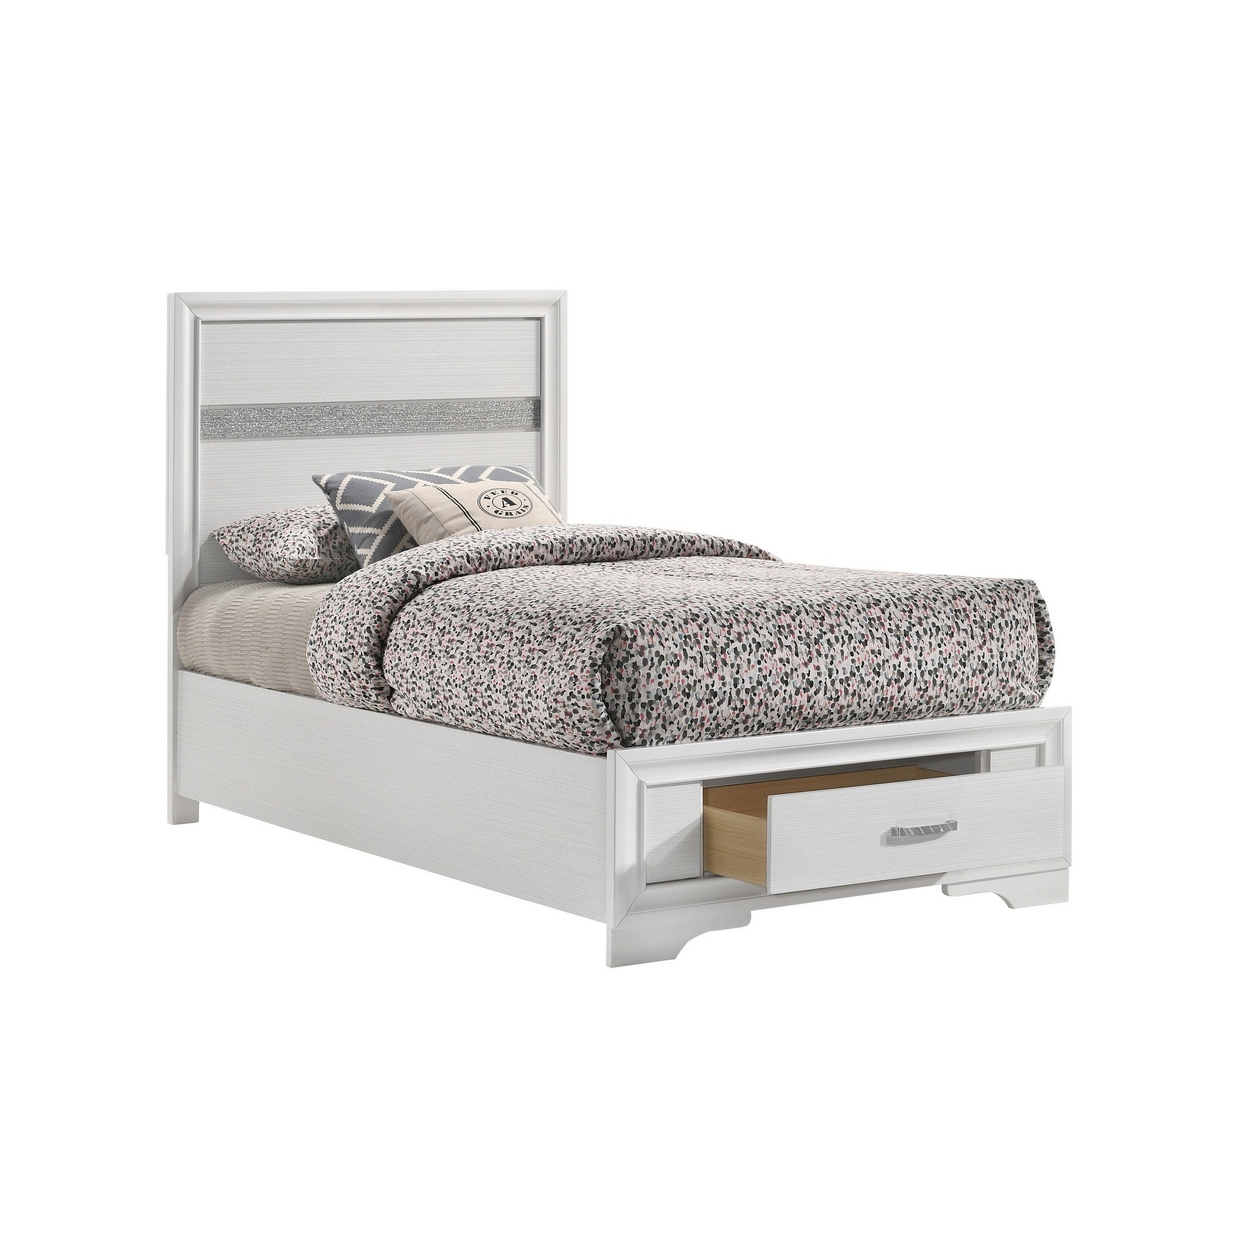 Vino Twin Size Panel Bed With 2 Storage Drawers, Acrylic Glitter, White- Saltoro Sherpi